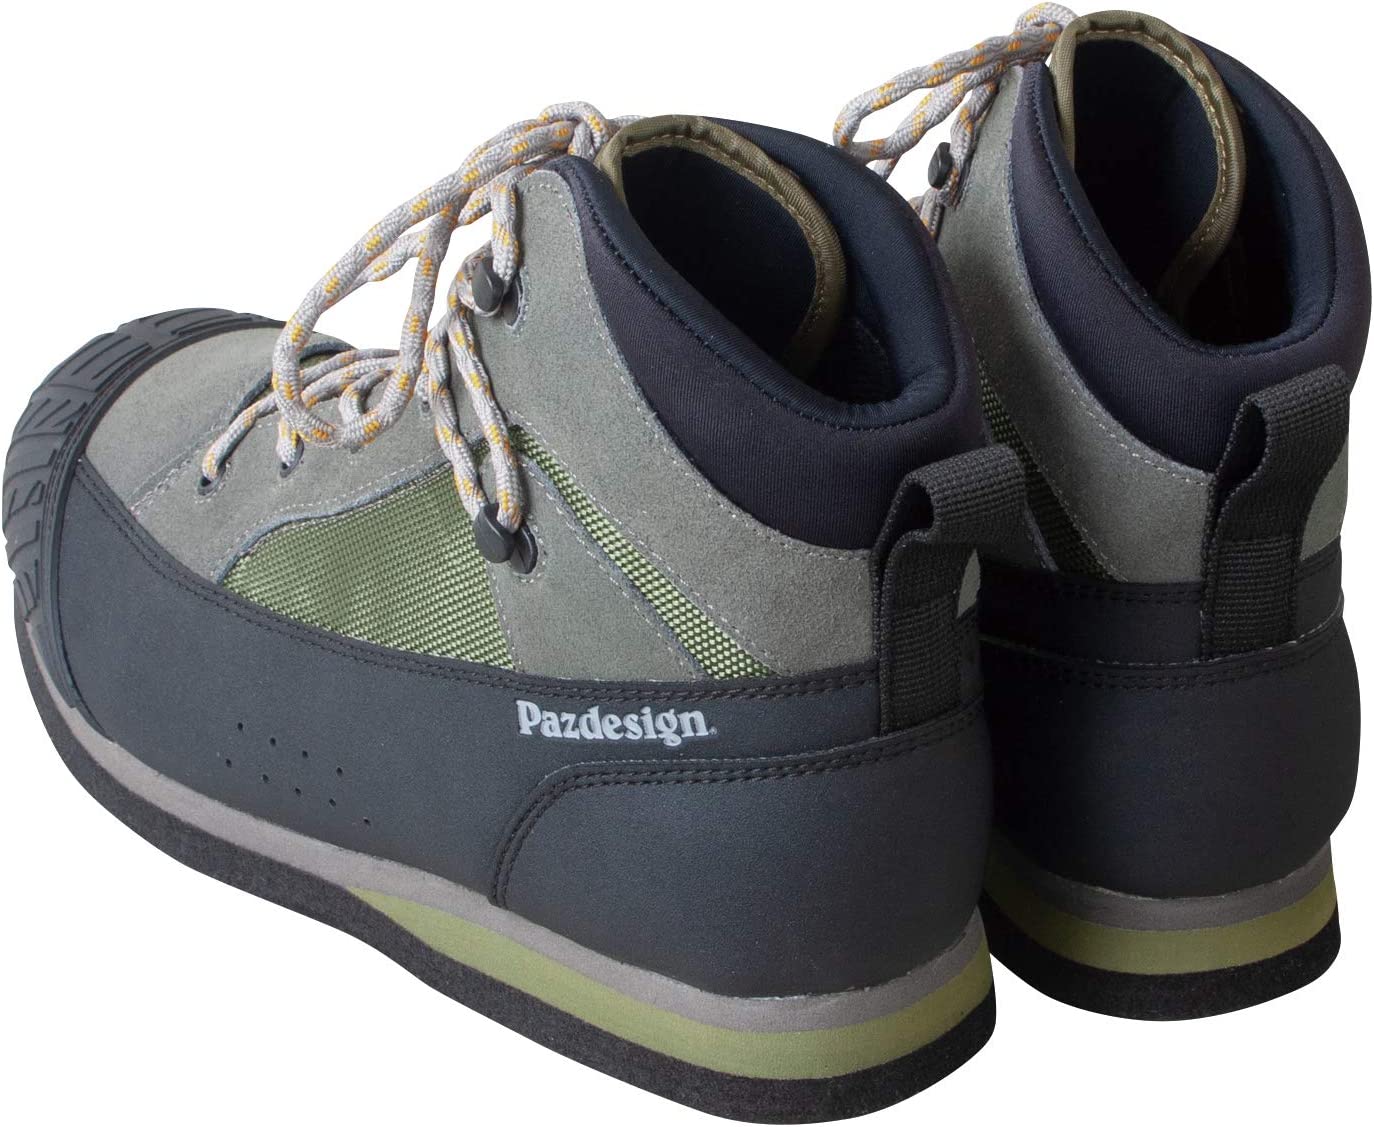 Pazdesignpaz design light weight wading shoes 4 felt [ size :L(27cm)]